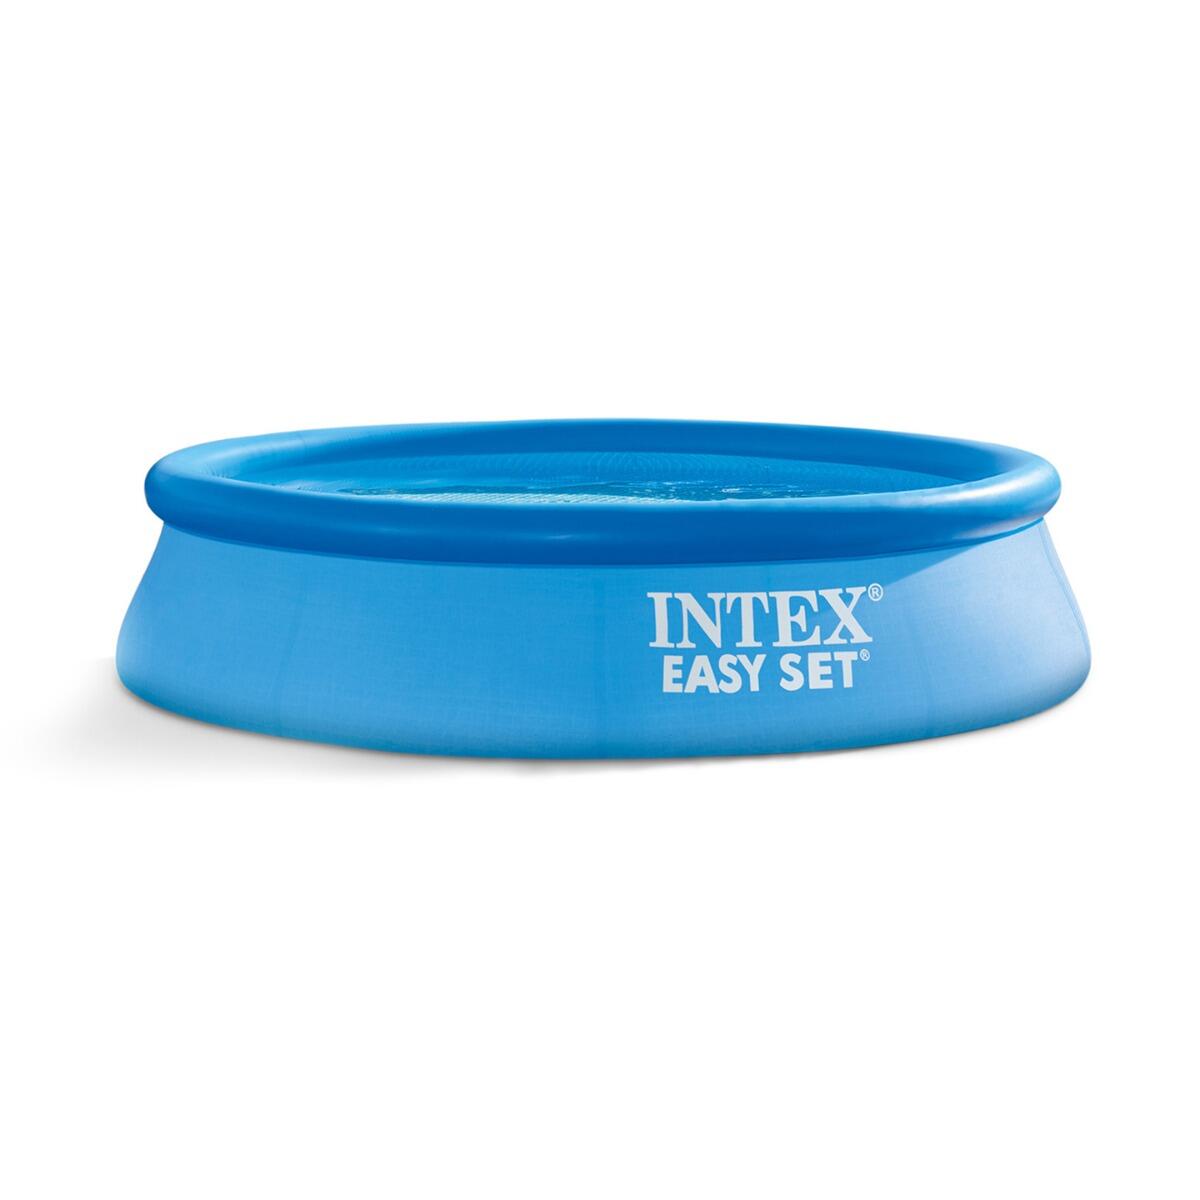 INTEX Intex Easy Set Pool Blue 8 Ft x 24" Swimming Pool